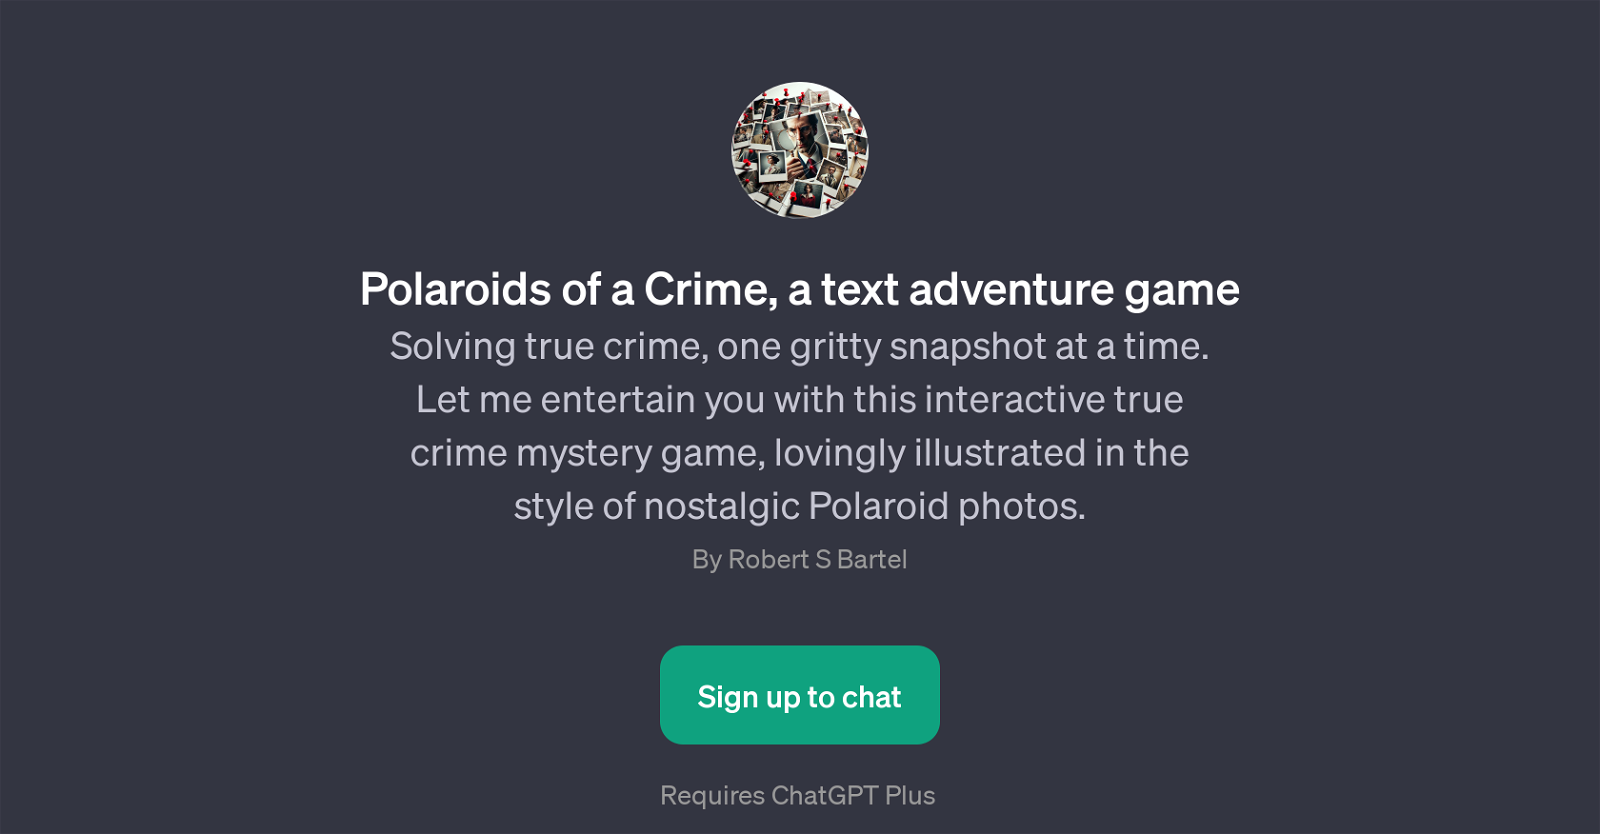 Polaroids of a Crime website